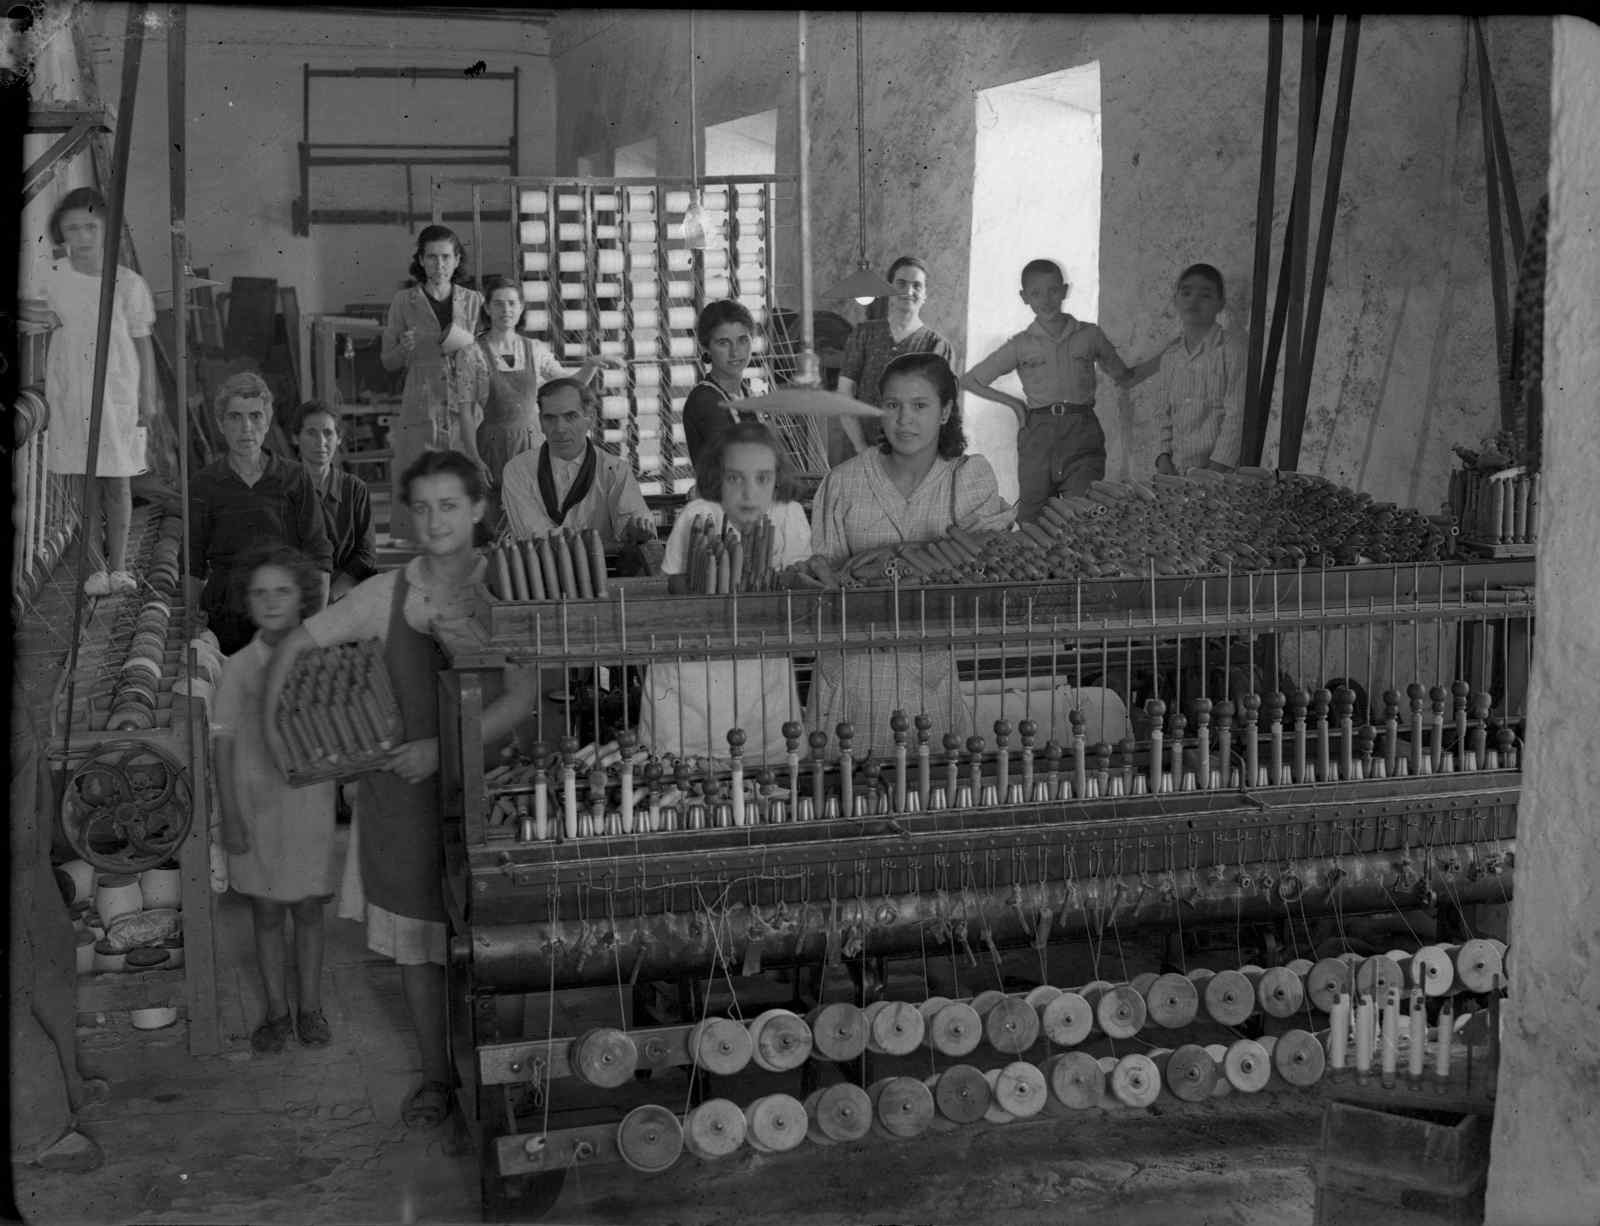 Memoria de la industria textil en Málaga